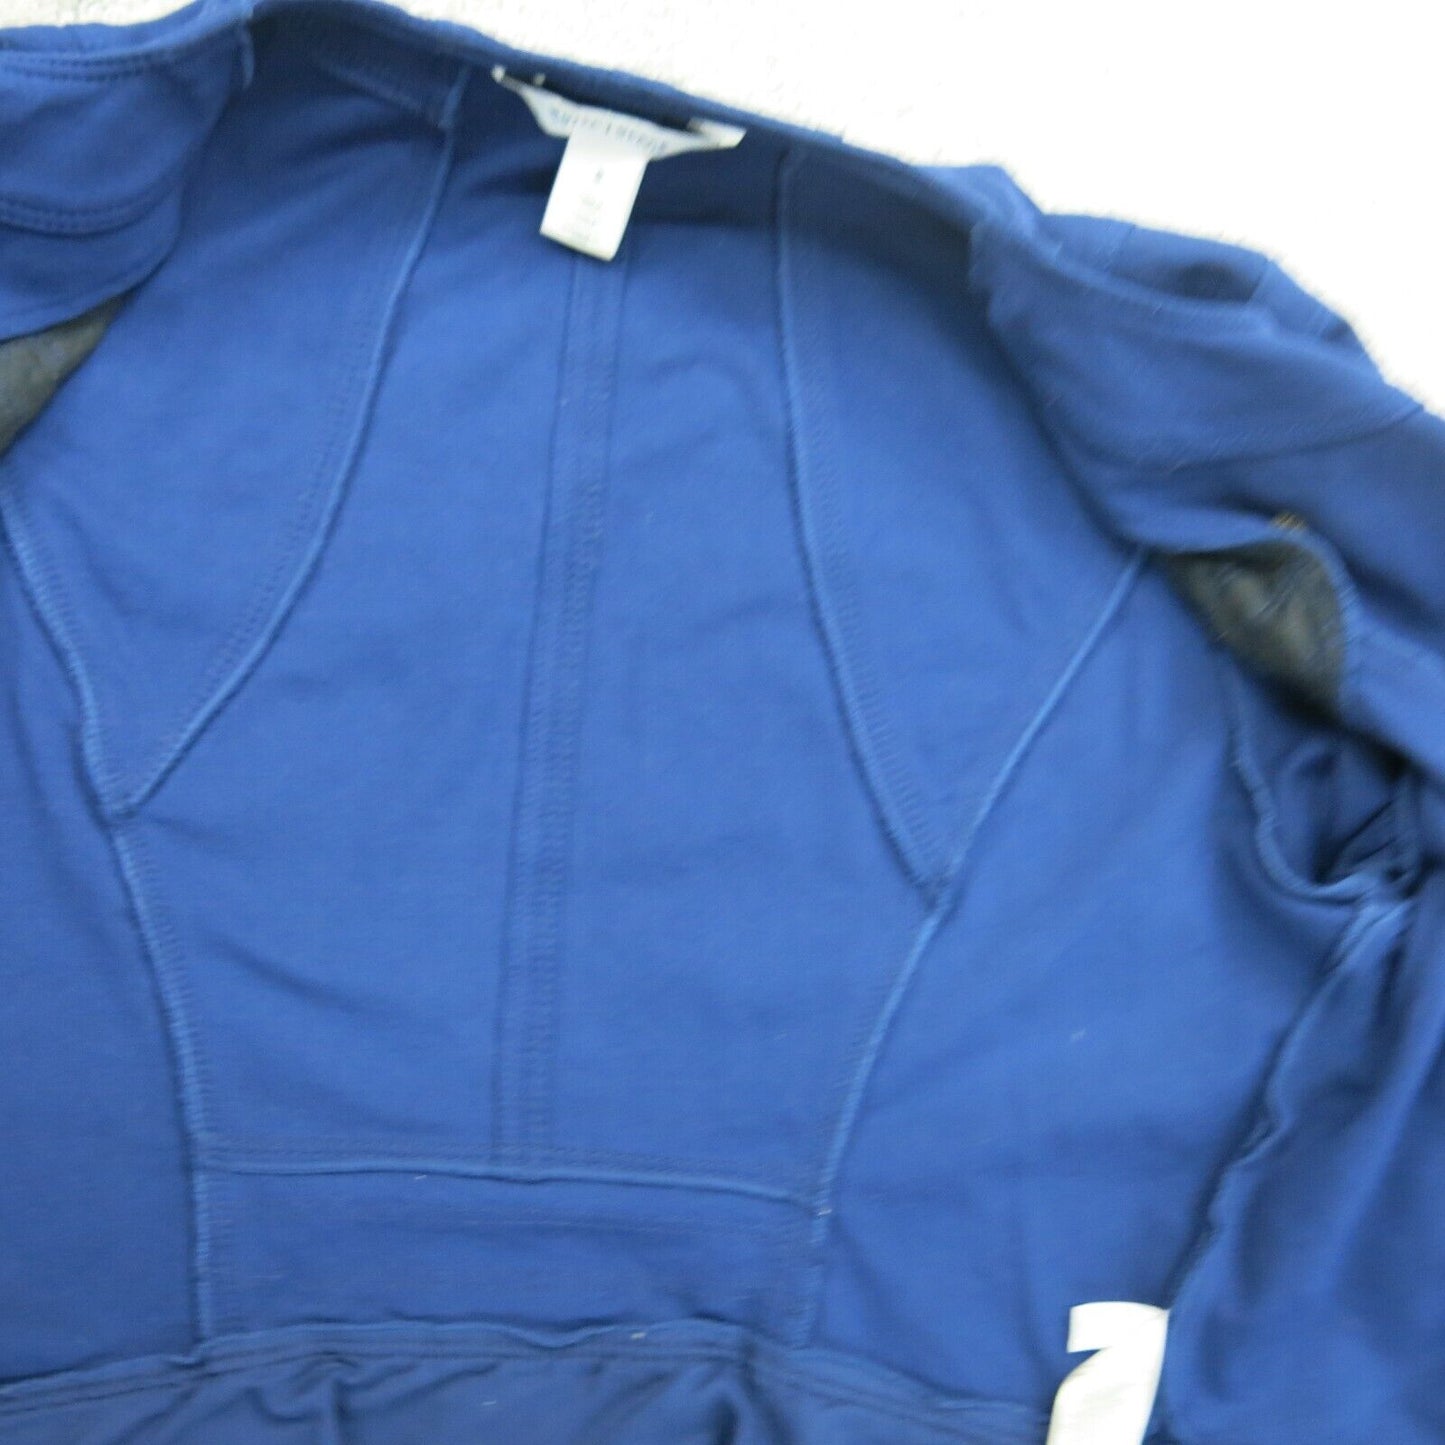 White House Black Market Womens Coat Jacket Full Zip Long Sleeve Navy Blue SZ 8